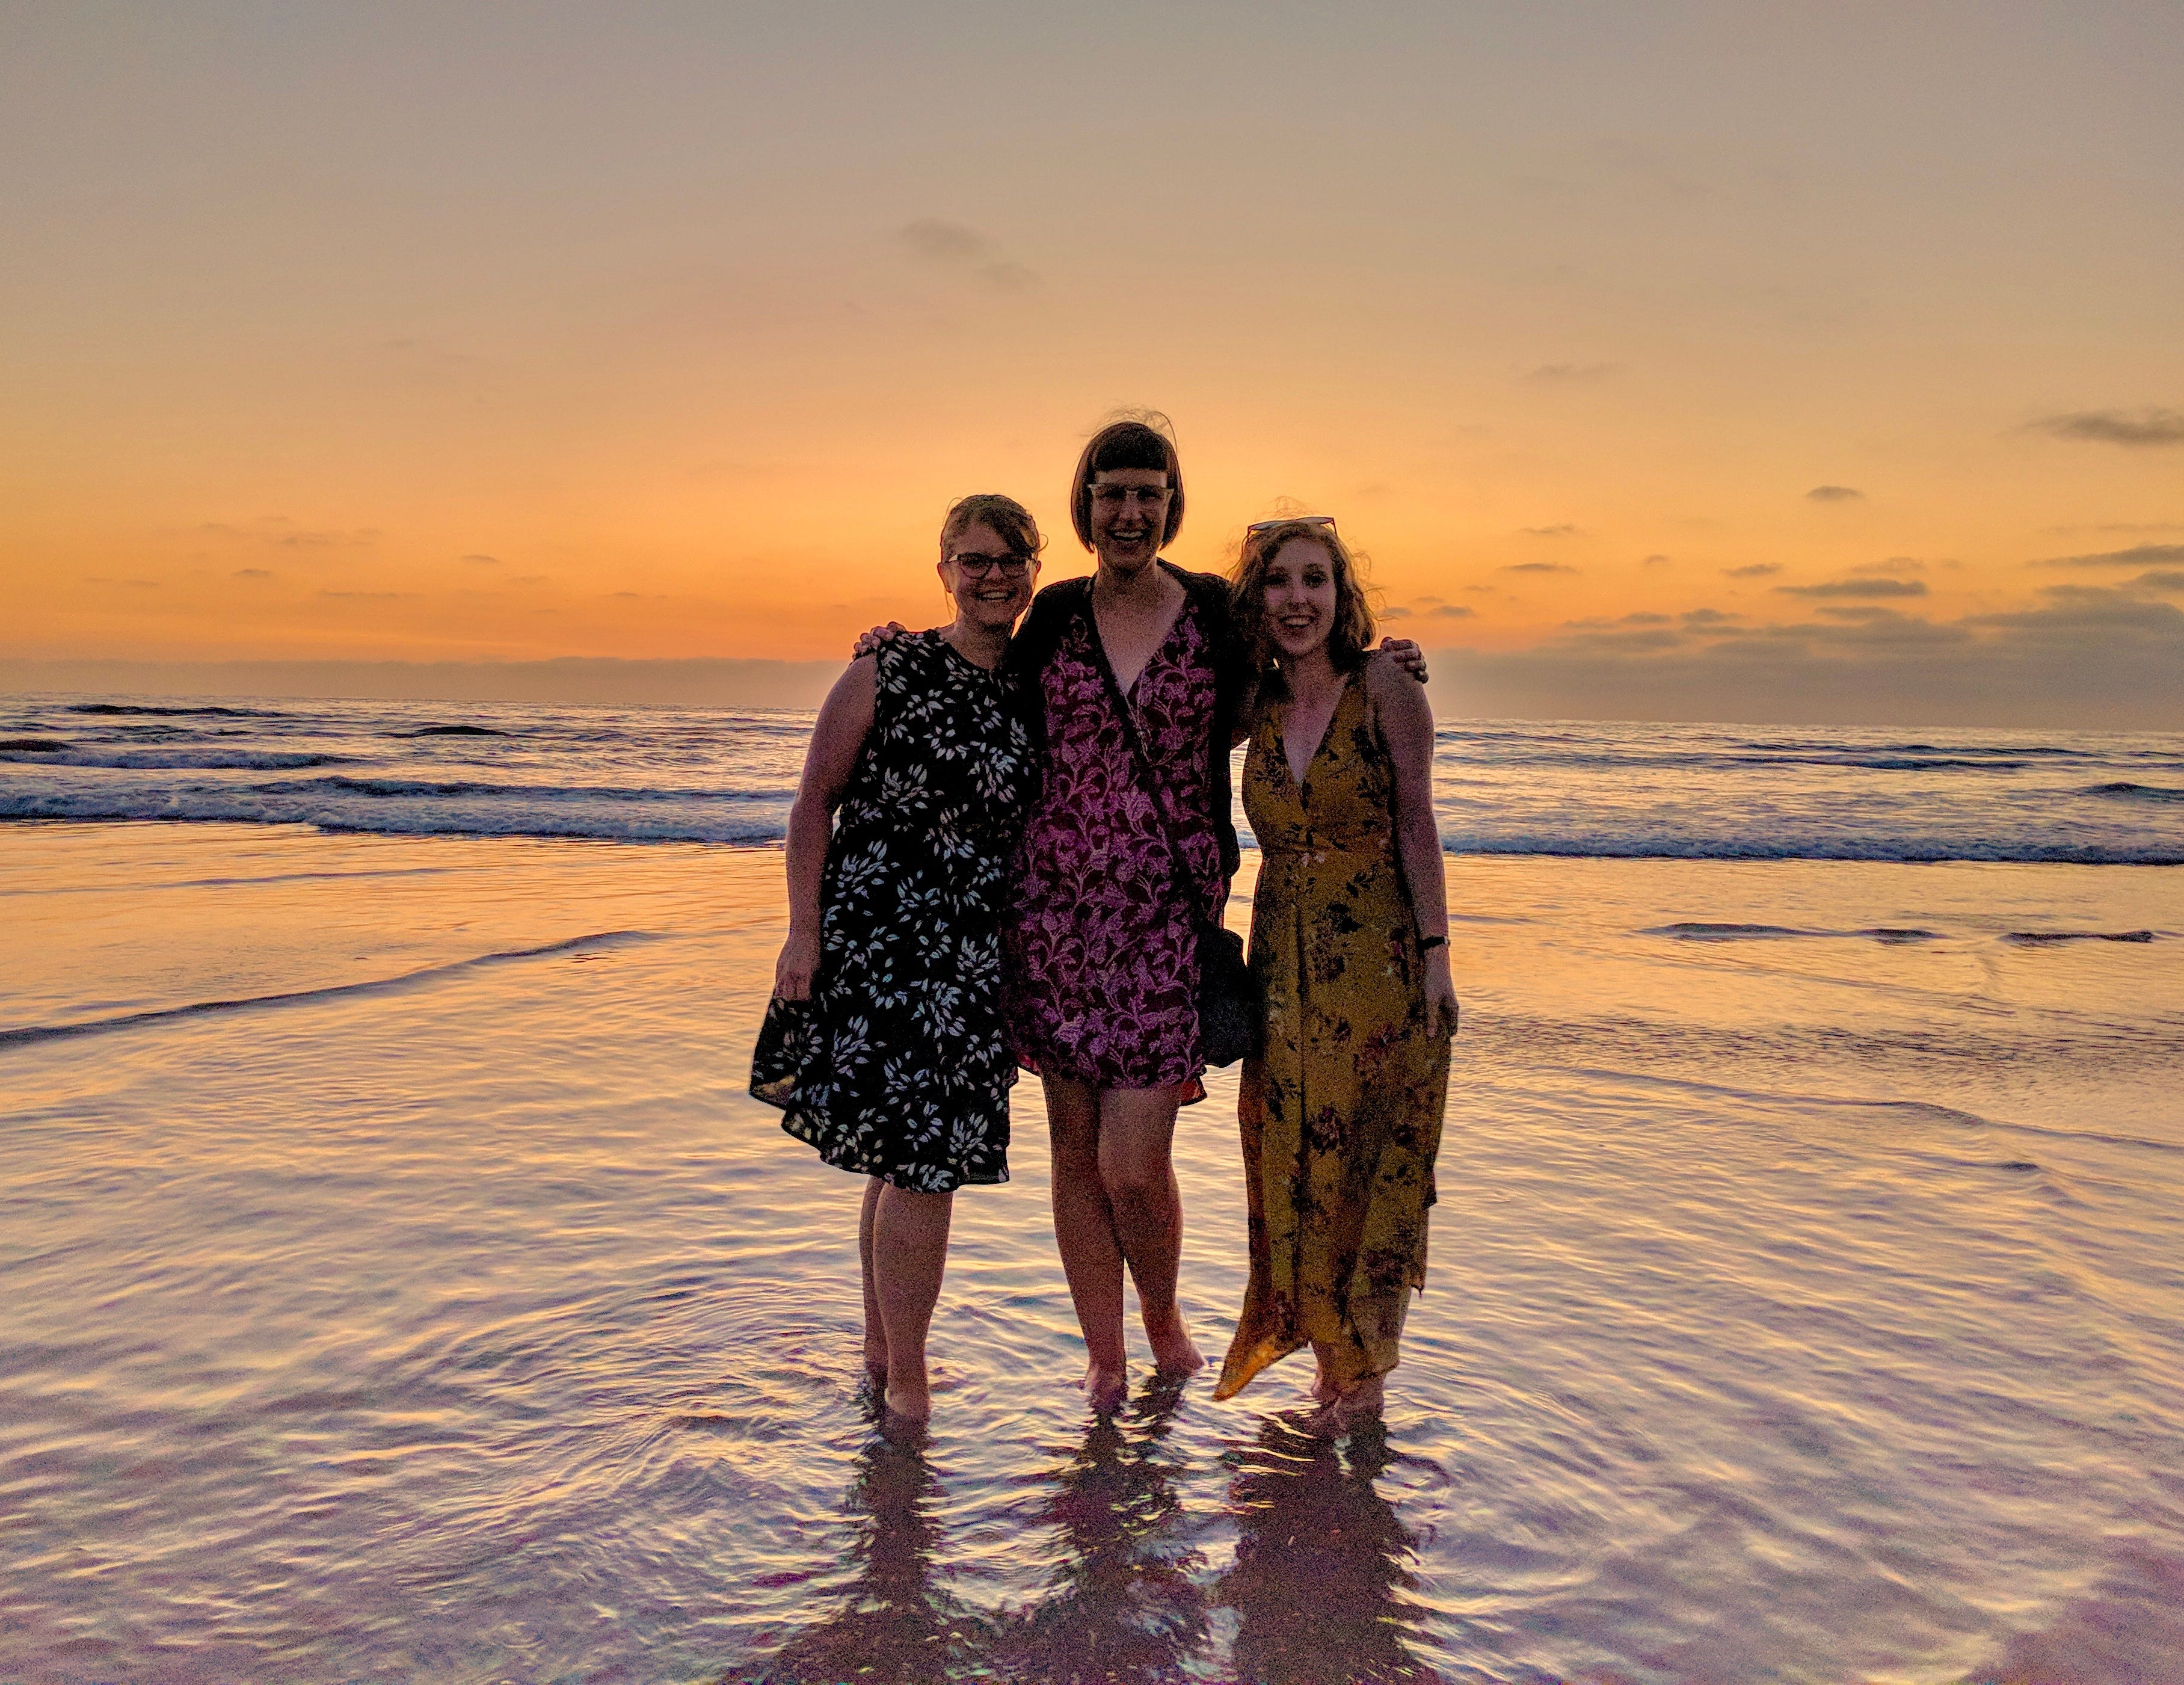 Ali Versluis, Sarah Hare, and myself on the beach in San Diego